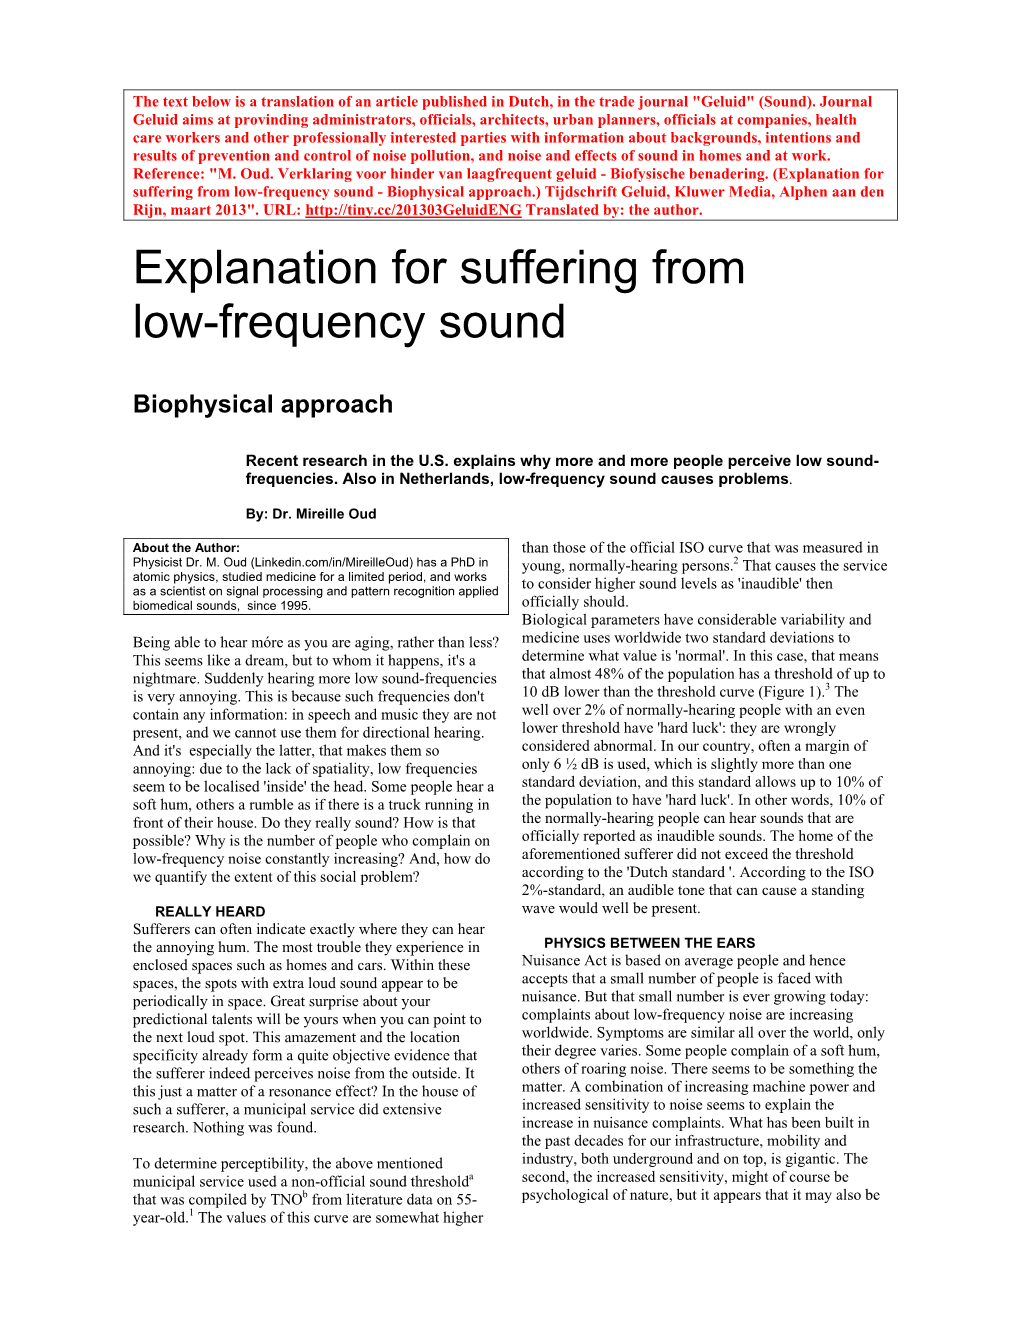 Explanation for Suffering from Low-Frequency Sound - Biophysical Approach.) Tijdschrift Geluid, Kluwer Media, Alphen Aan Den Rijn, Maart 2013"